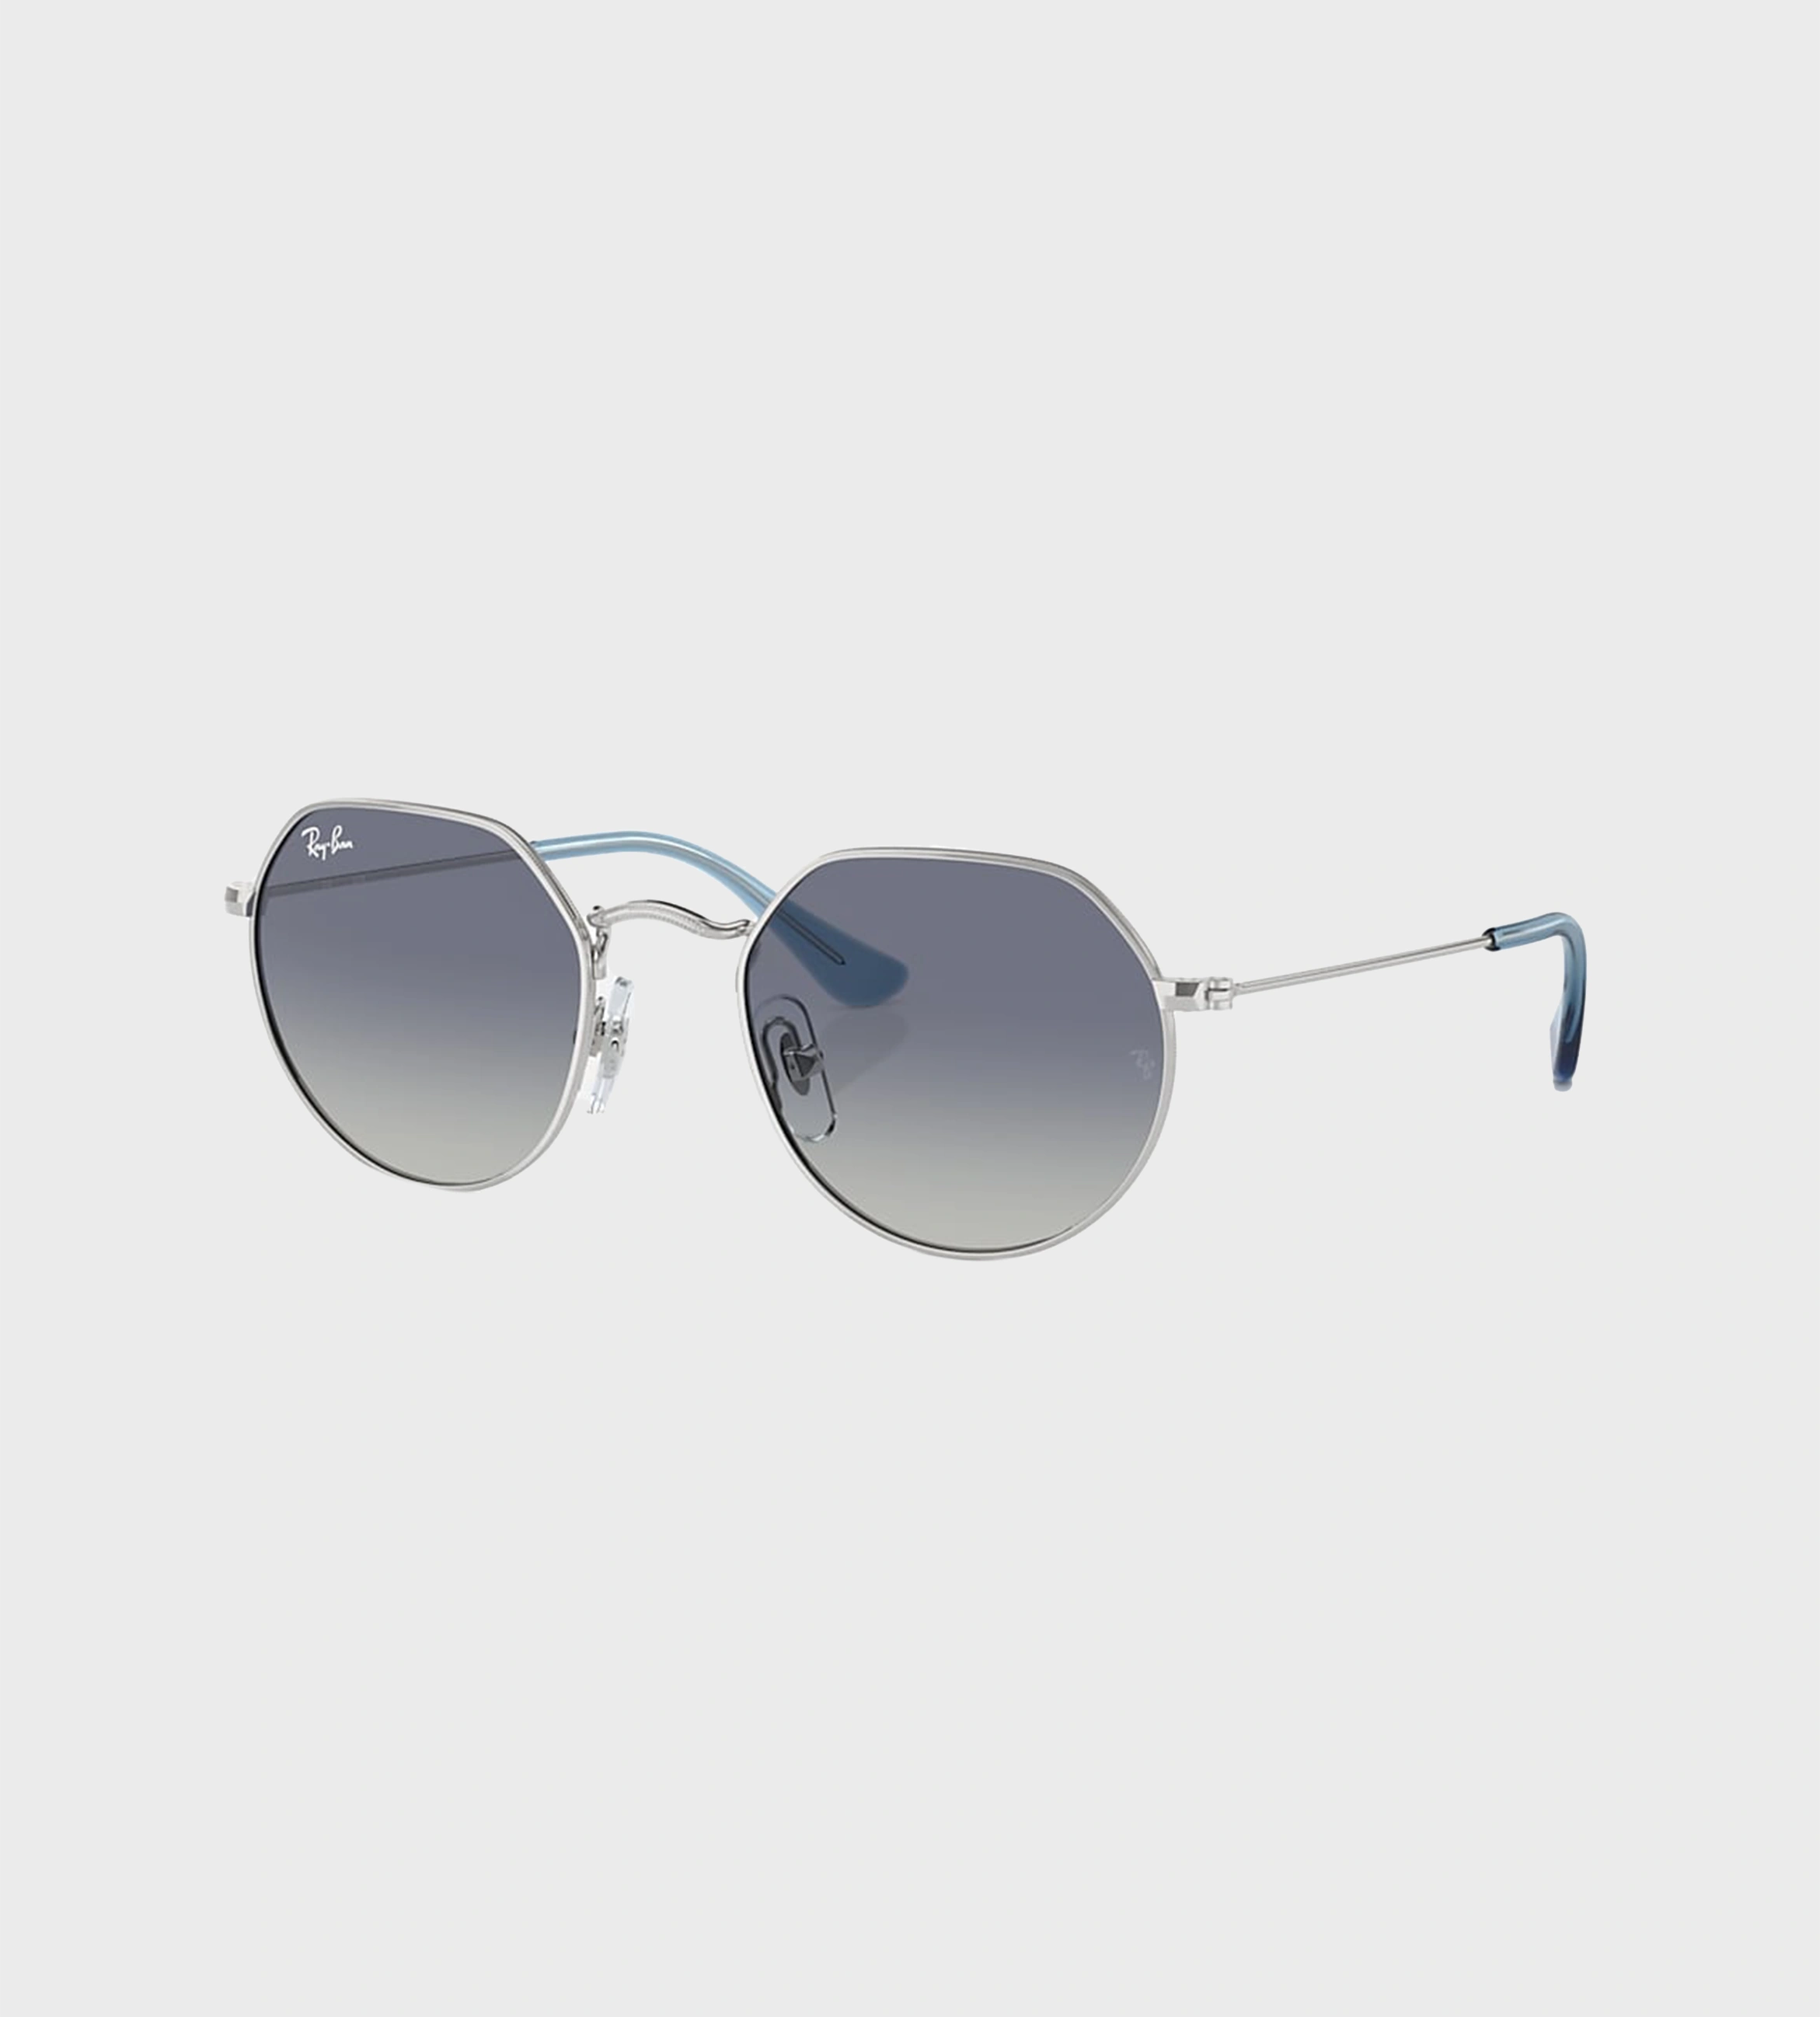 Jack Metal Sunglasses Blue/Silver